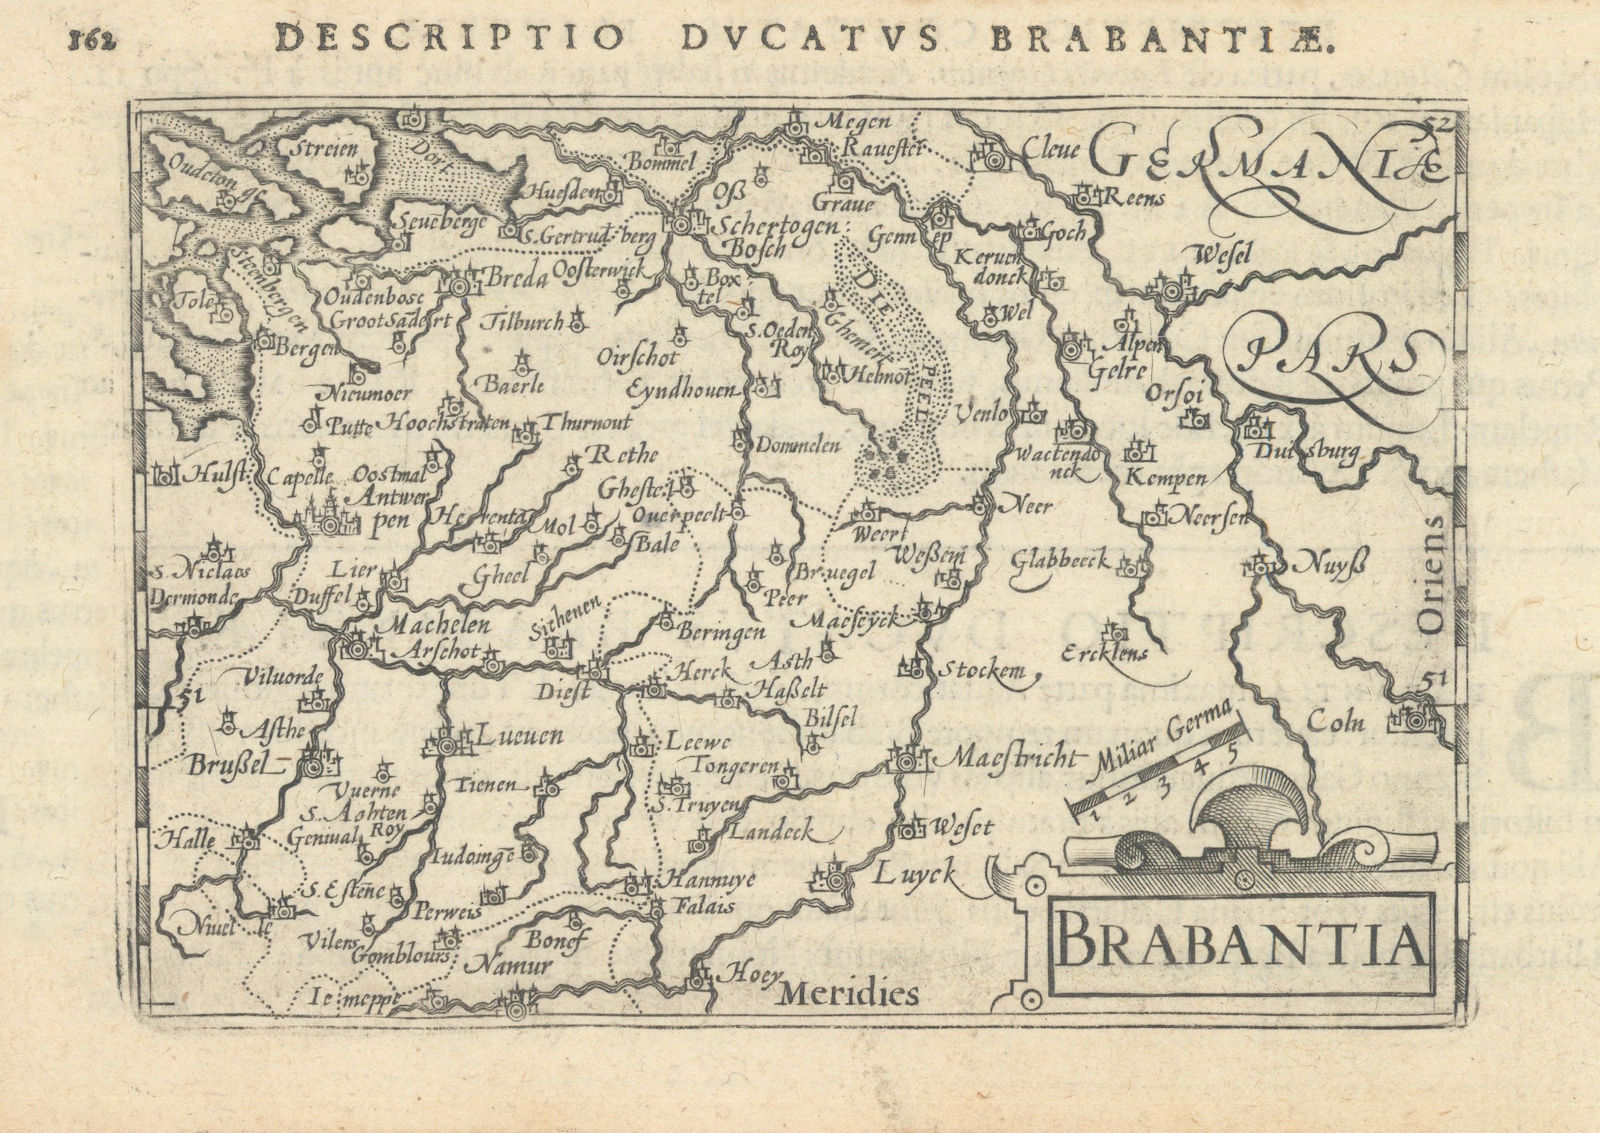 Ducatus Brabantiae / Brabantia by Bertius / Langenes. Duchy of Brabant 1603 map